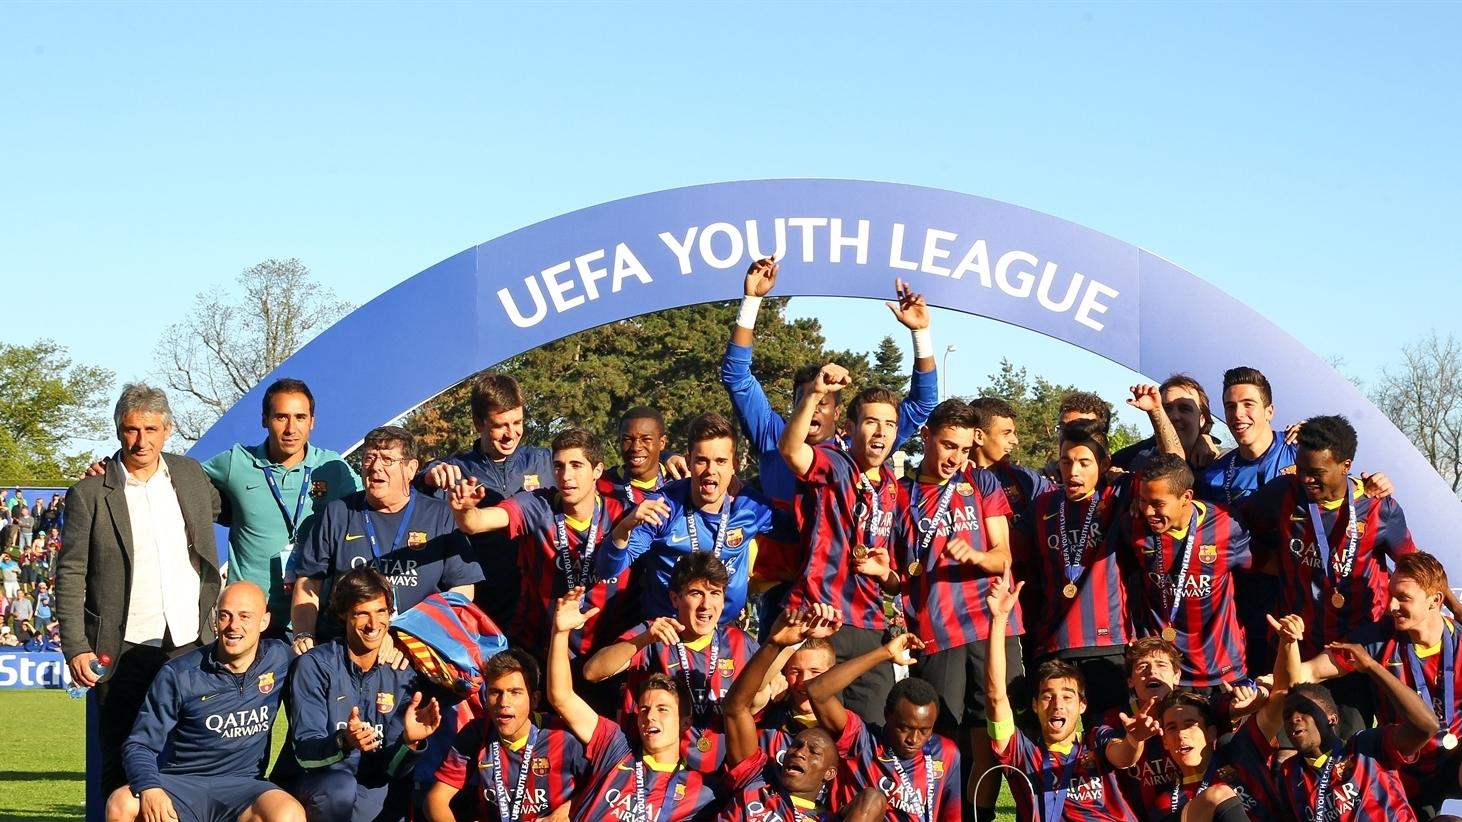 uefa youth league groups